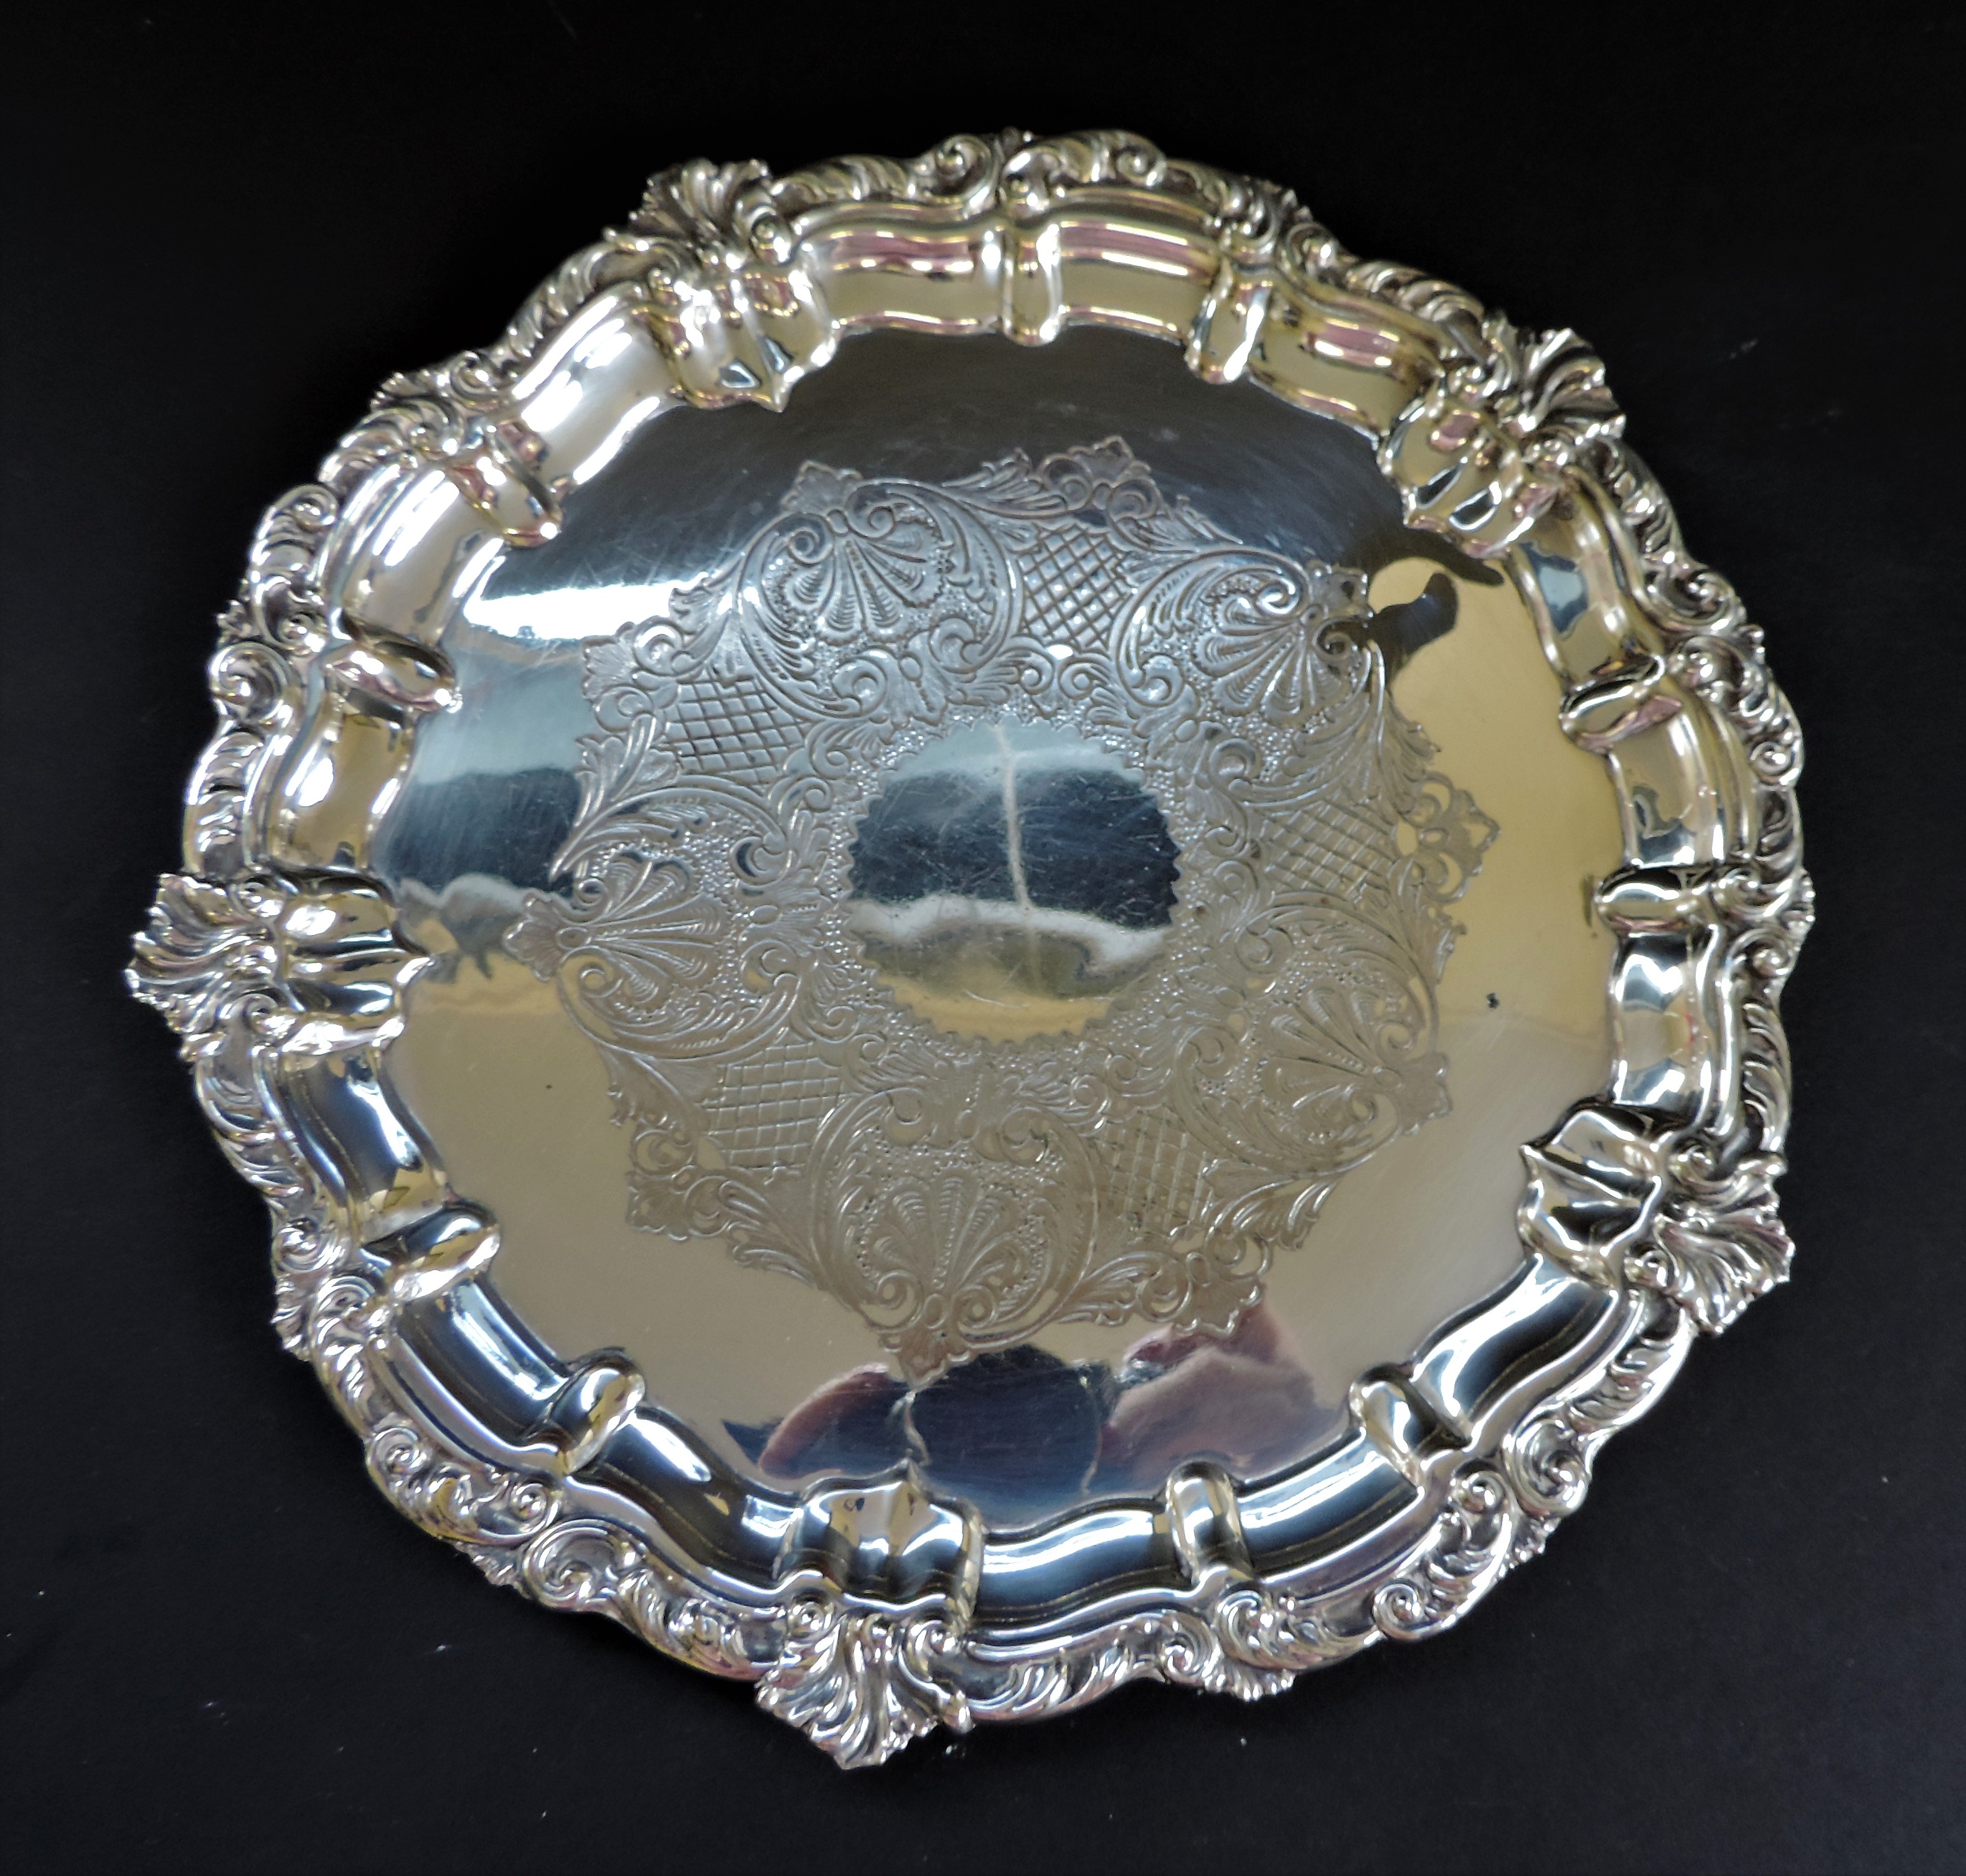 Circa 1930's Travis Wilson & Co Silver Plate Salver. A fine quality silver plate salver/card tray